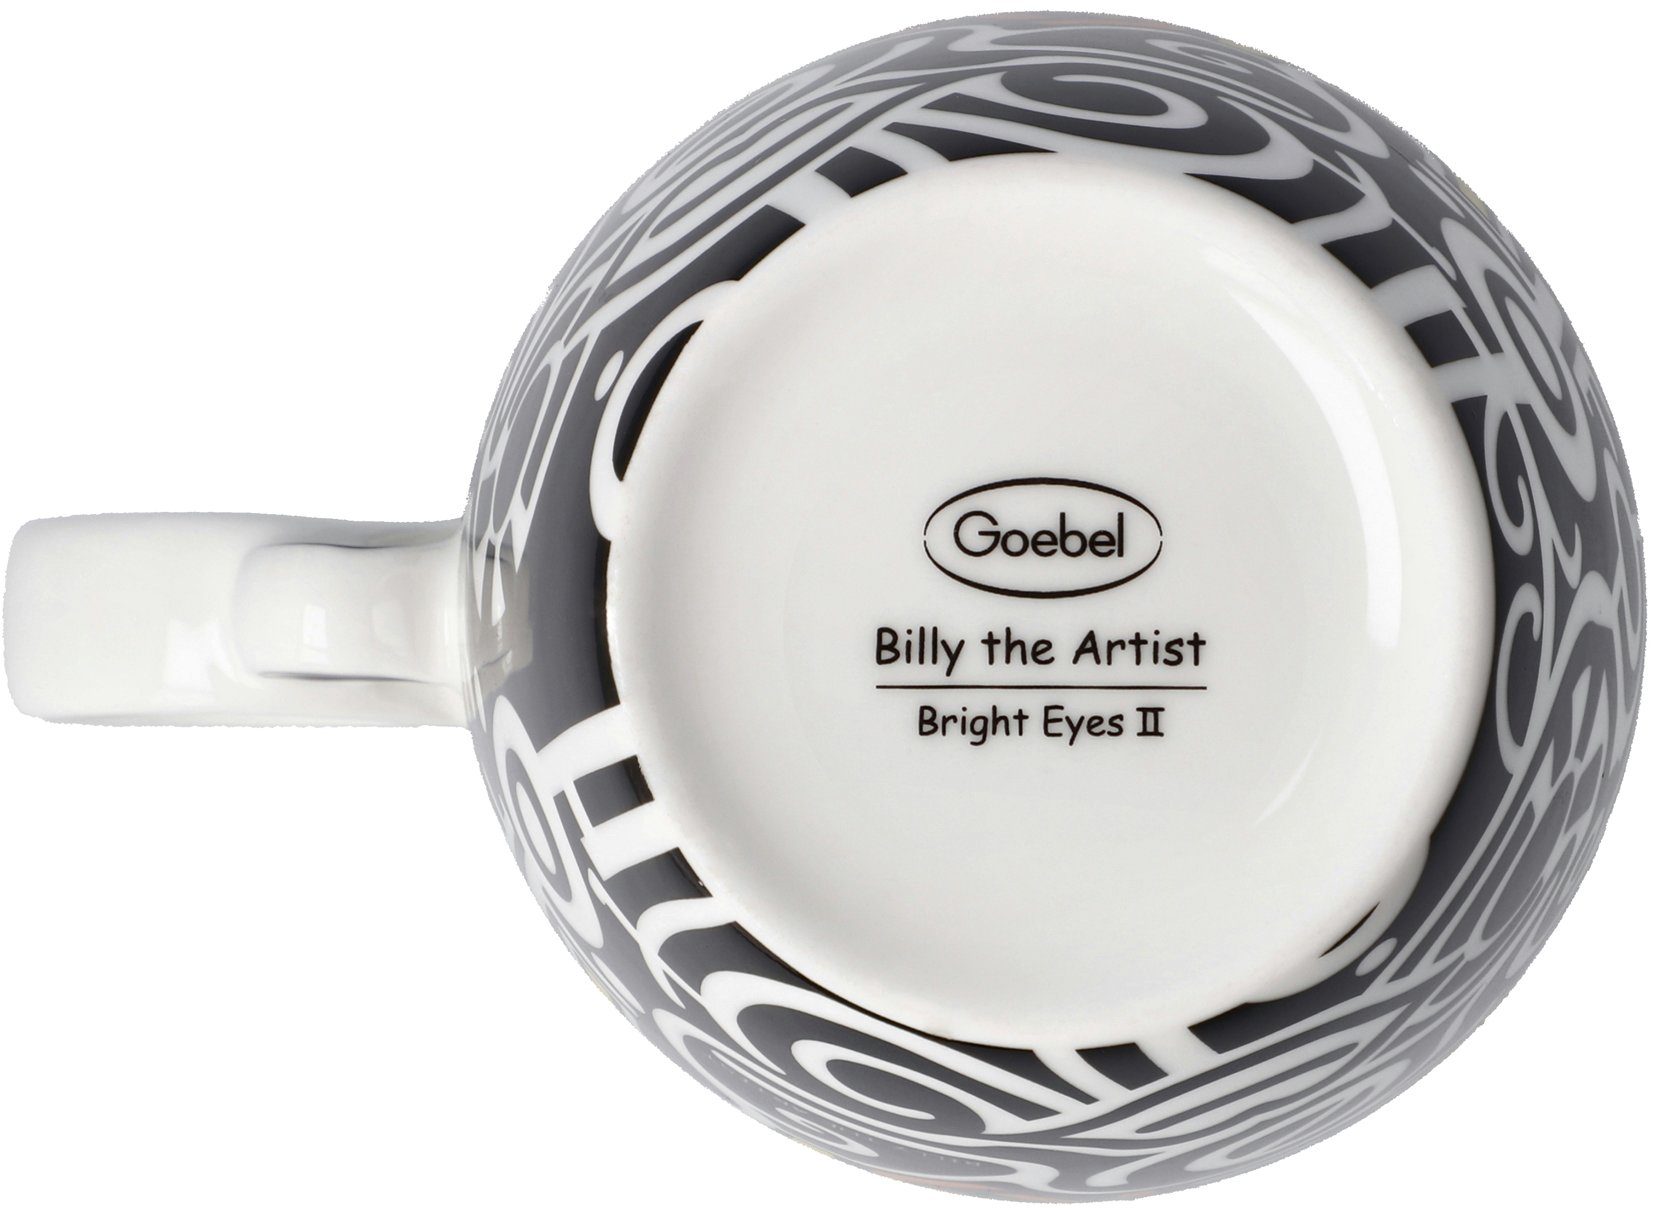 the Artist Art, Artist, Künstlertasse, Eyes II - Pop Bright Goebel Porzellan, Billy Billy The Tasse